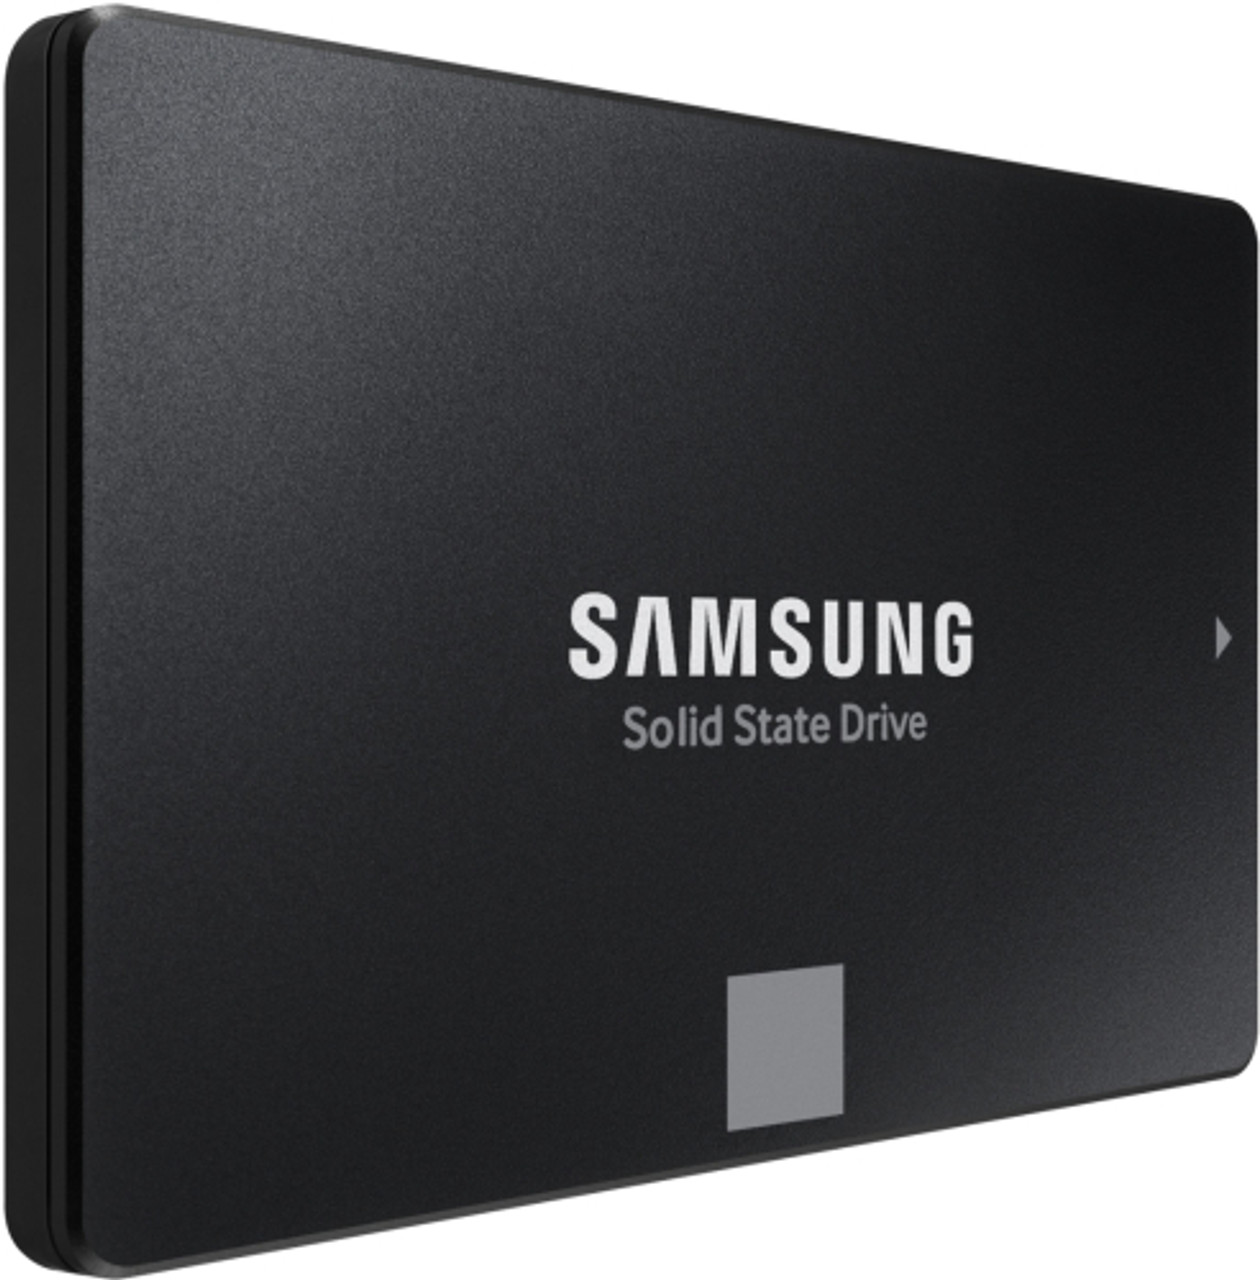 Samsung - Geek Squad Certified Refurbished 870 EVO 500GB SATA Solid State Drive